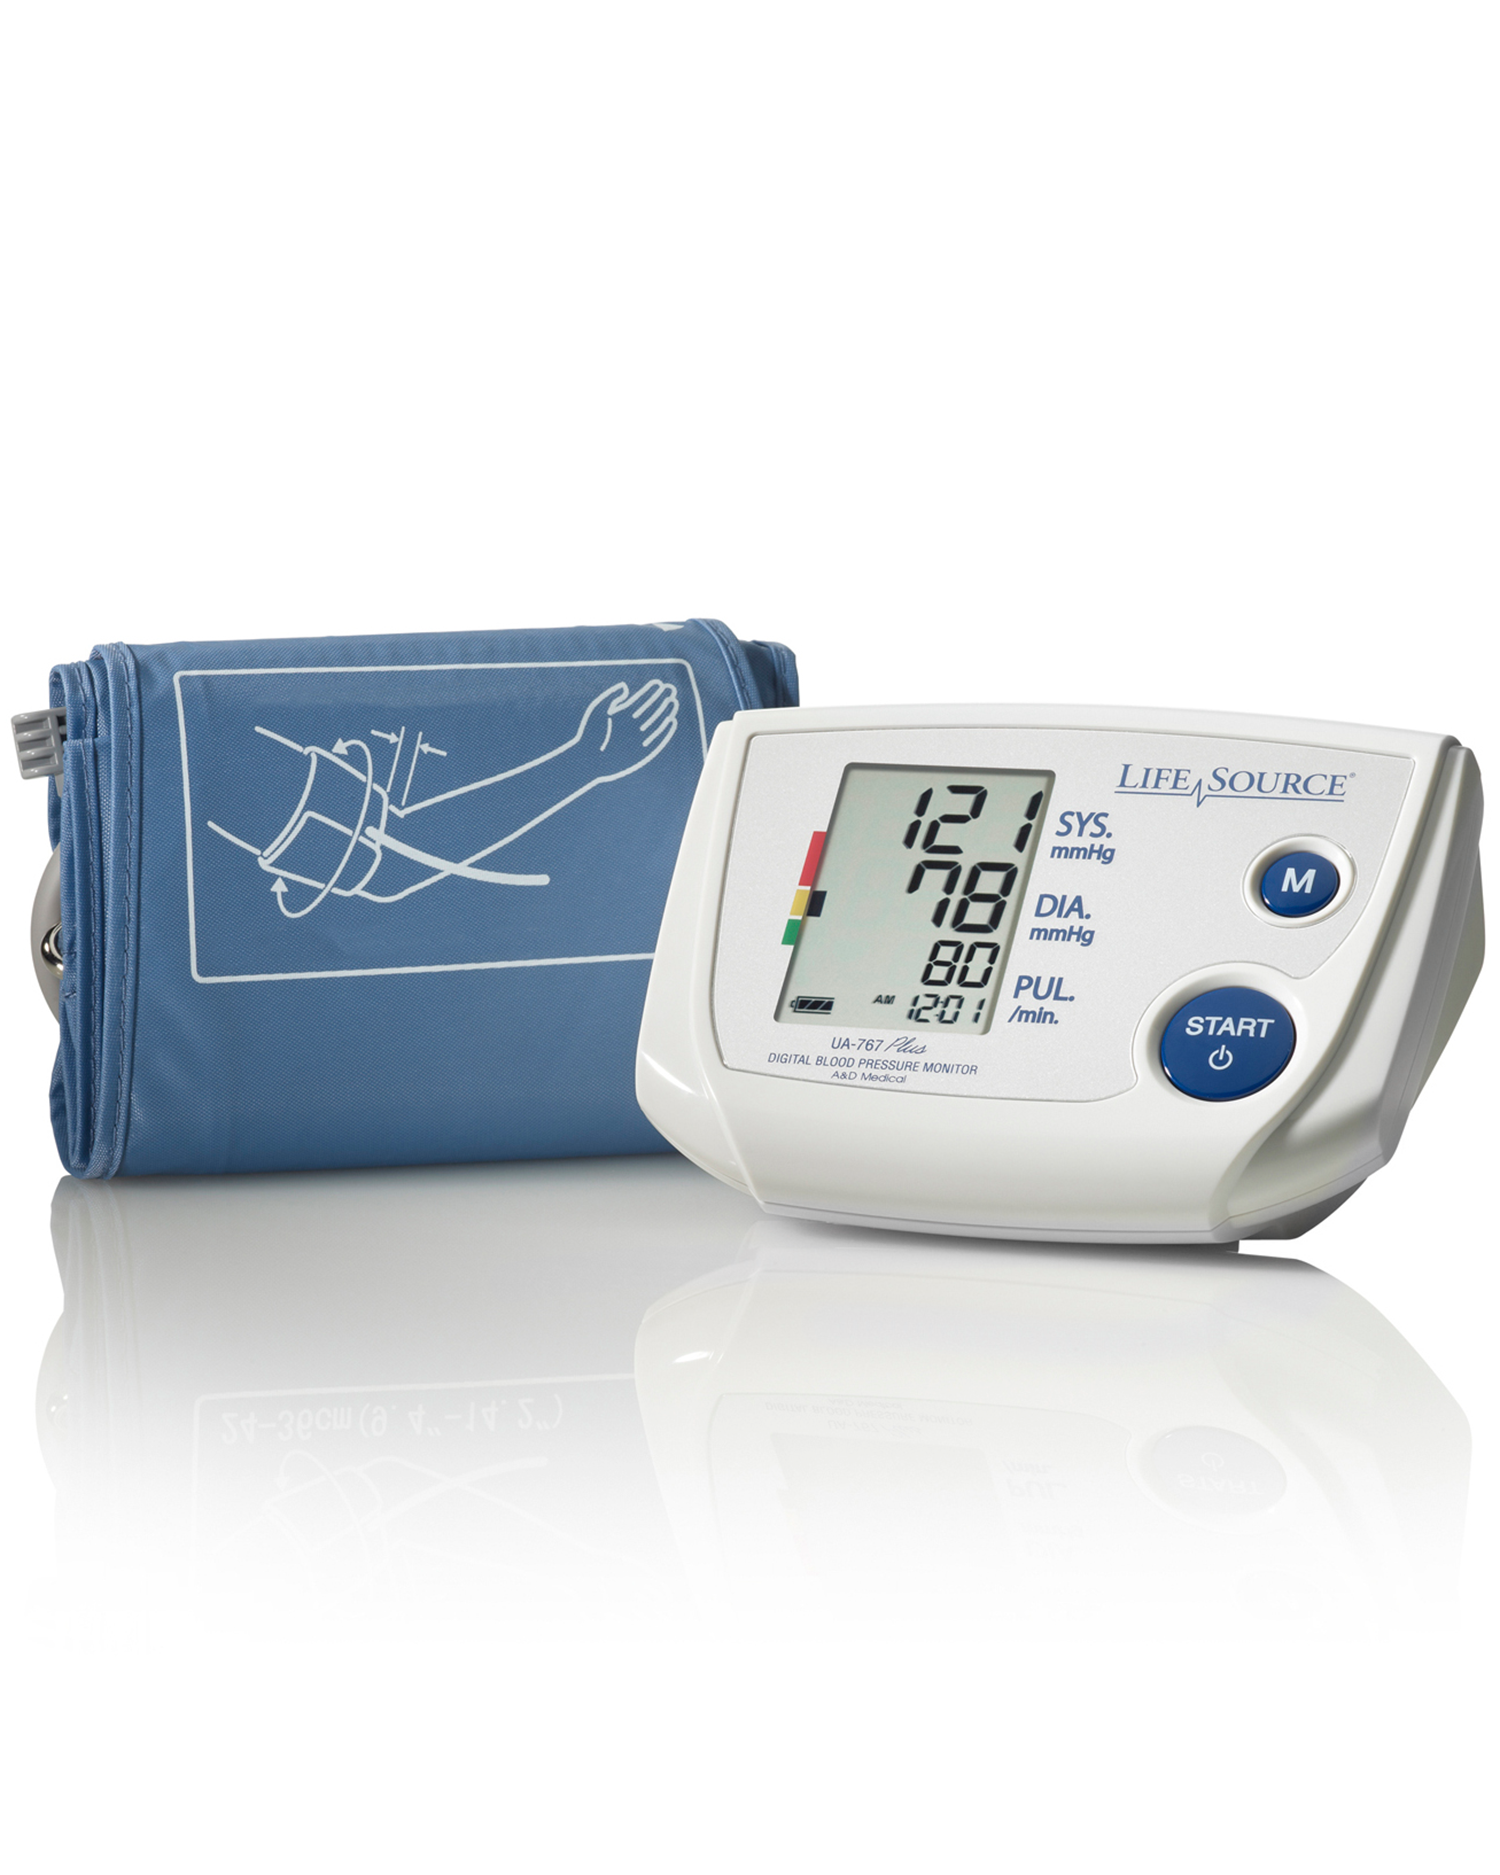 A&D Lifesource Pro Blood Pressure Monitor with Small Cuff (UA-767PVS)